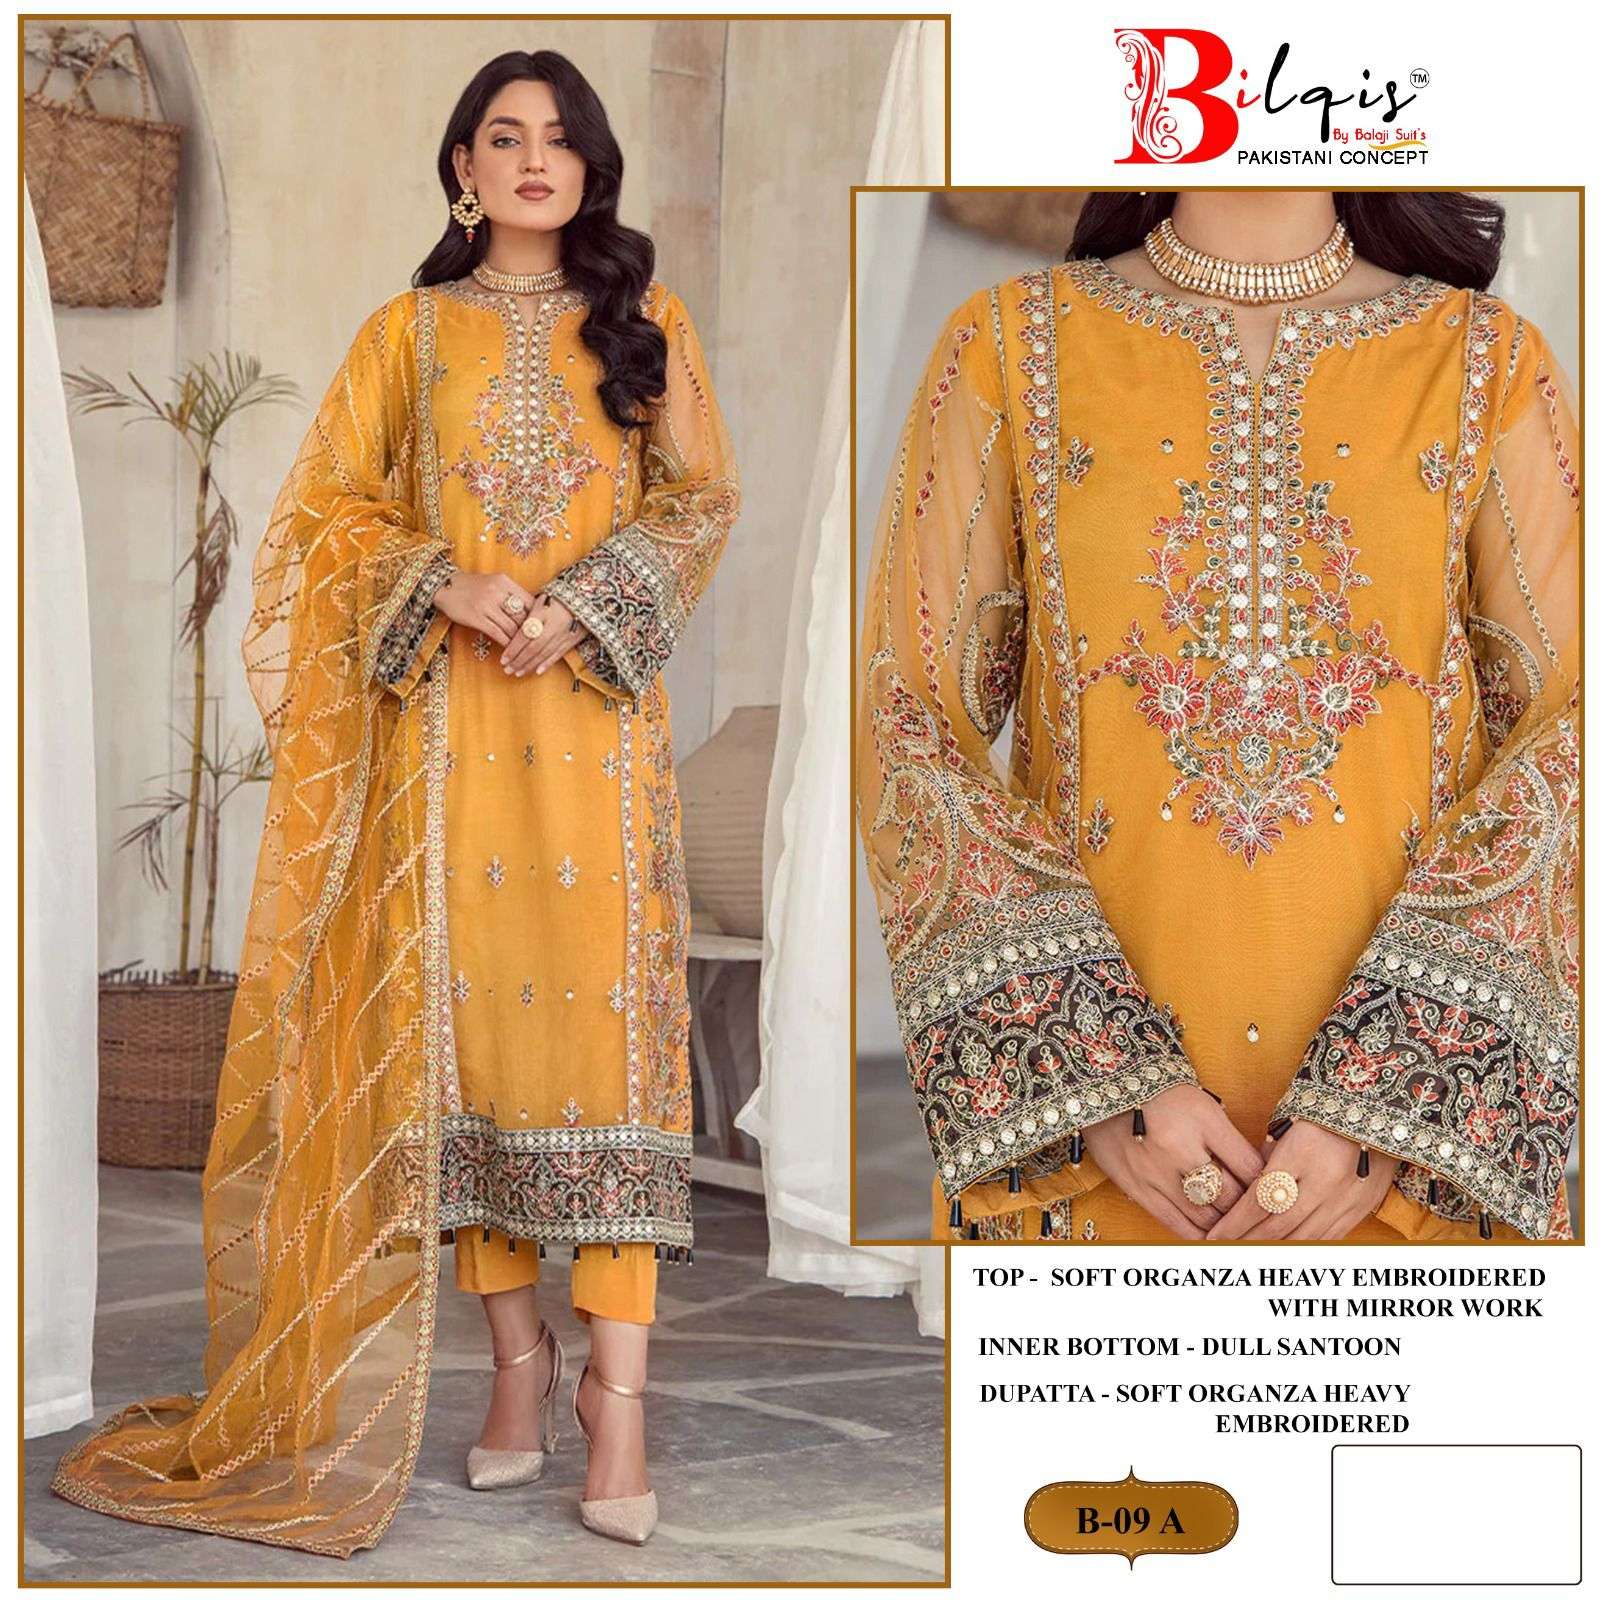 Bilqis B 09 Soft Organza Embroidered Pakistani Suits Wholesale catalog